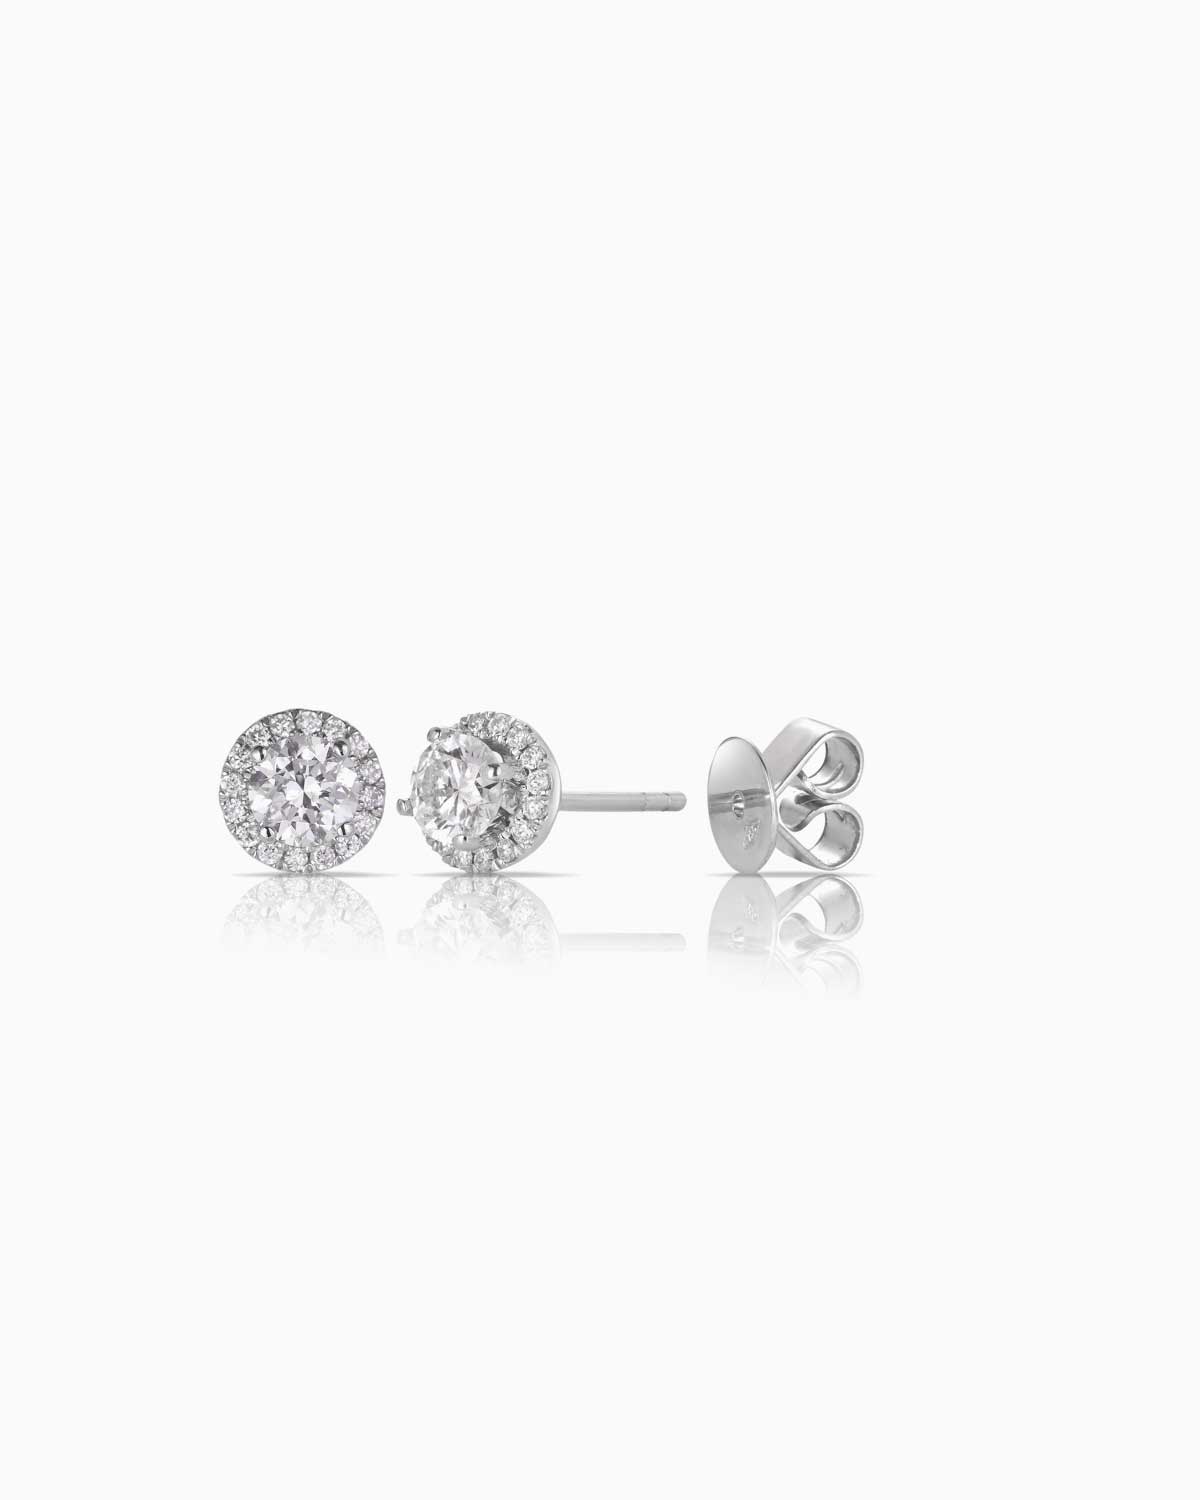 18 karat white gold diamond halo earrings featuring butterfly secure backs